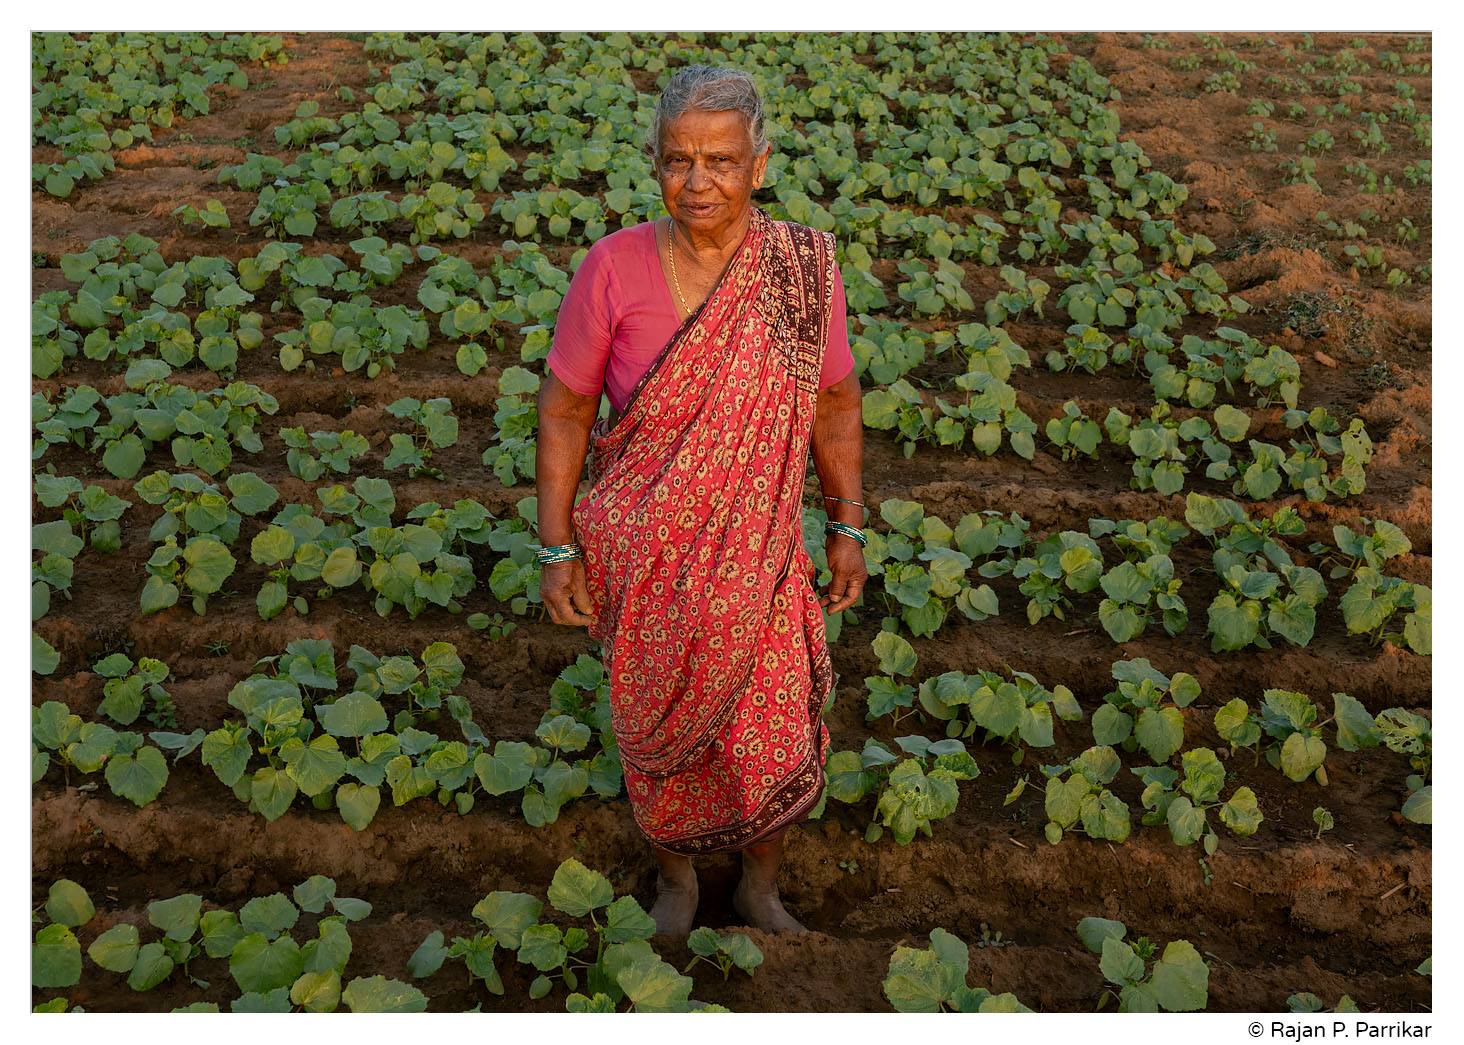 Farmer Sitabai Canconkar, Taleigao, Goa